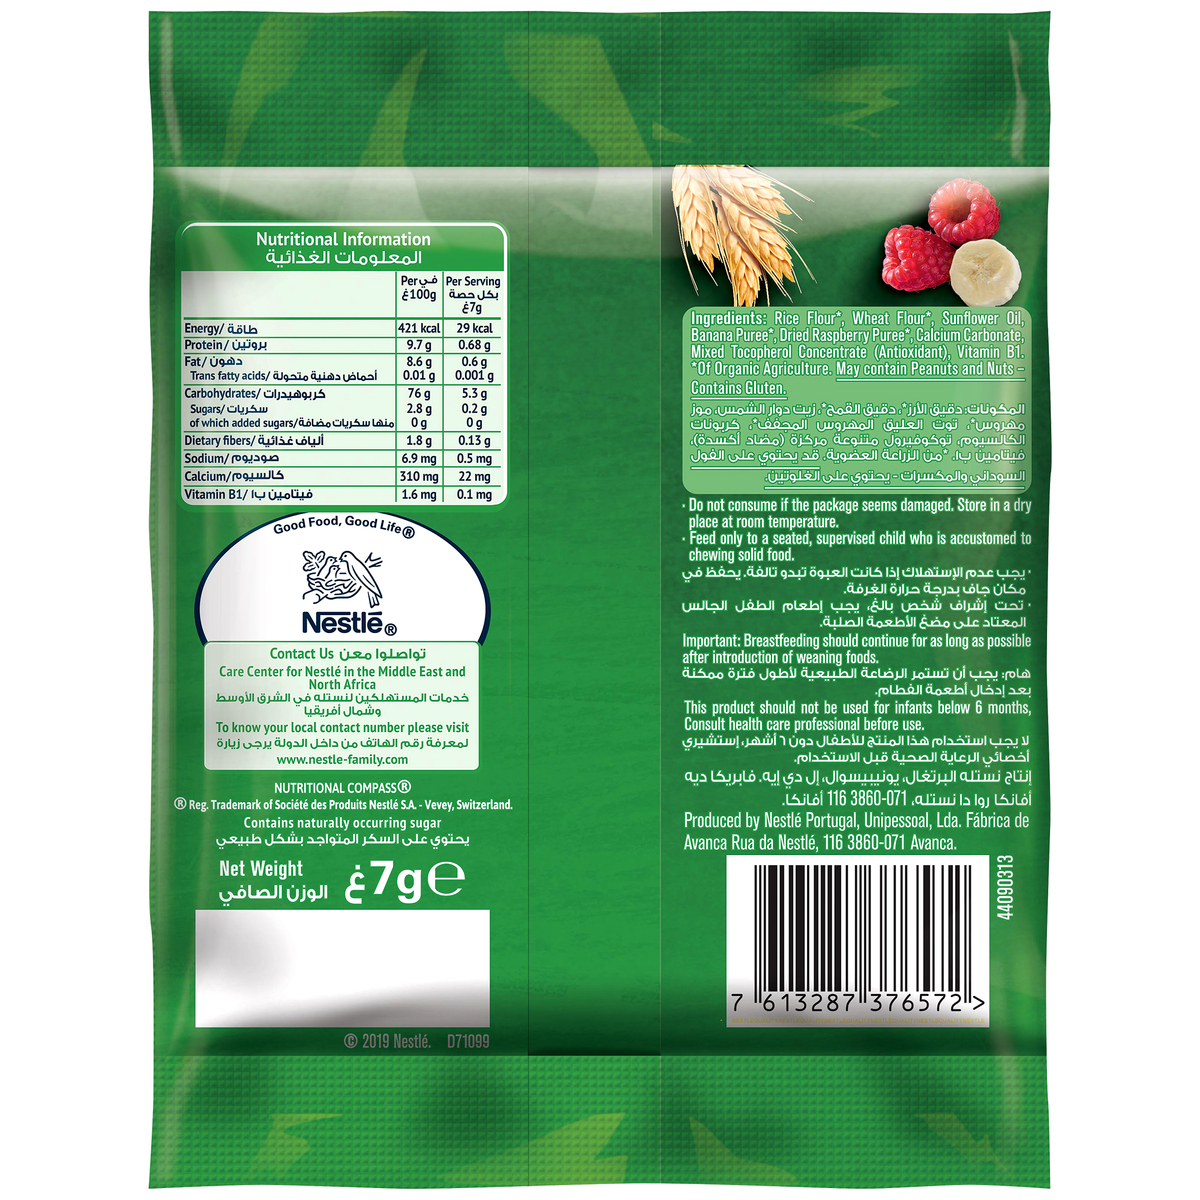 Gerber Organic Nutripuffs Raspberry & Banana Sachet 7 g